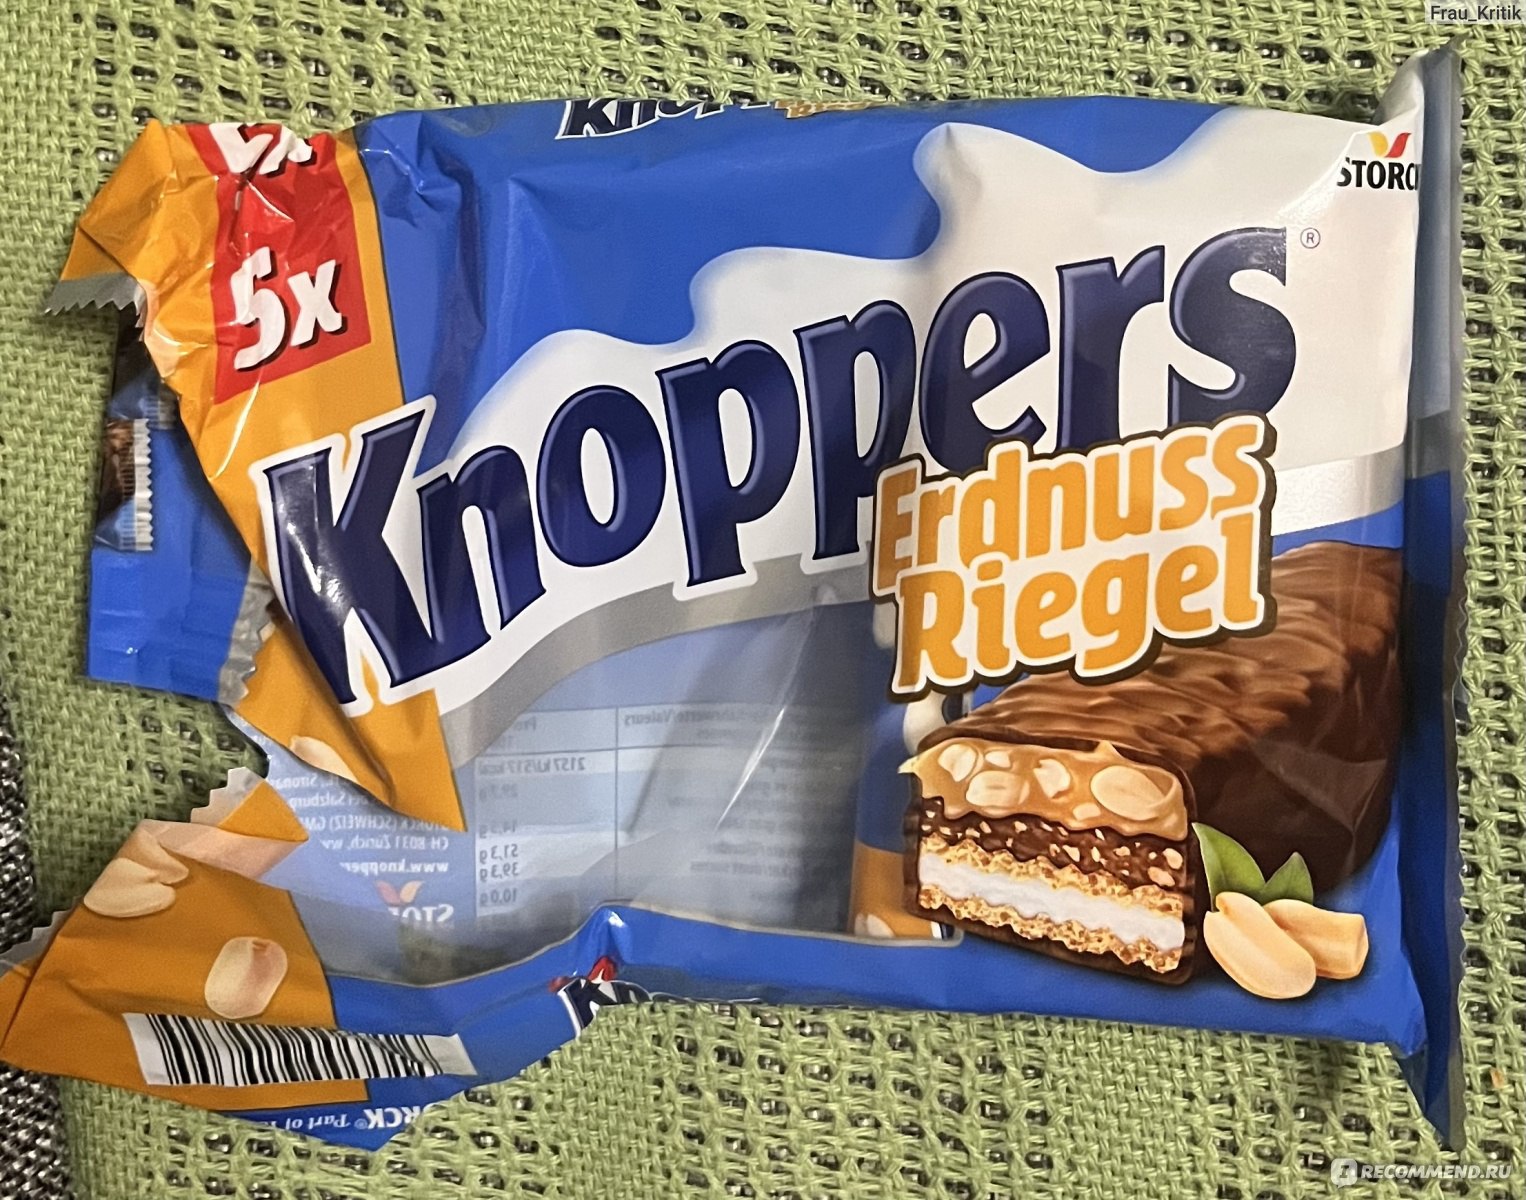 Knoppers. Knoppers батончики. Кноперс шоколад. Knoppers шоколадки. Немецкая шоколадка.